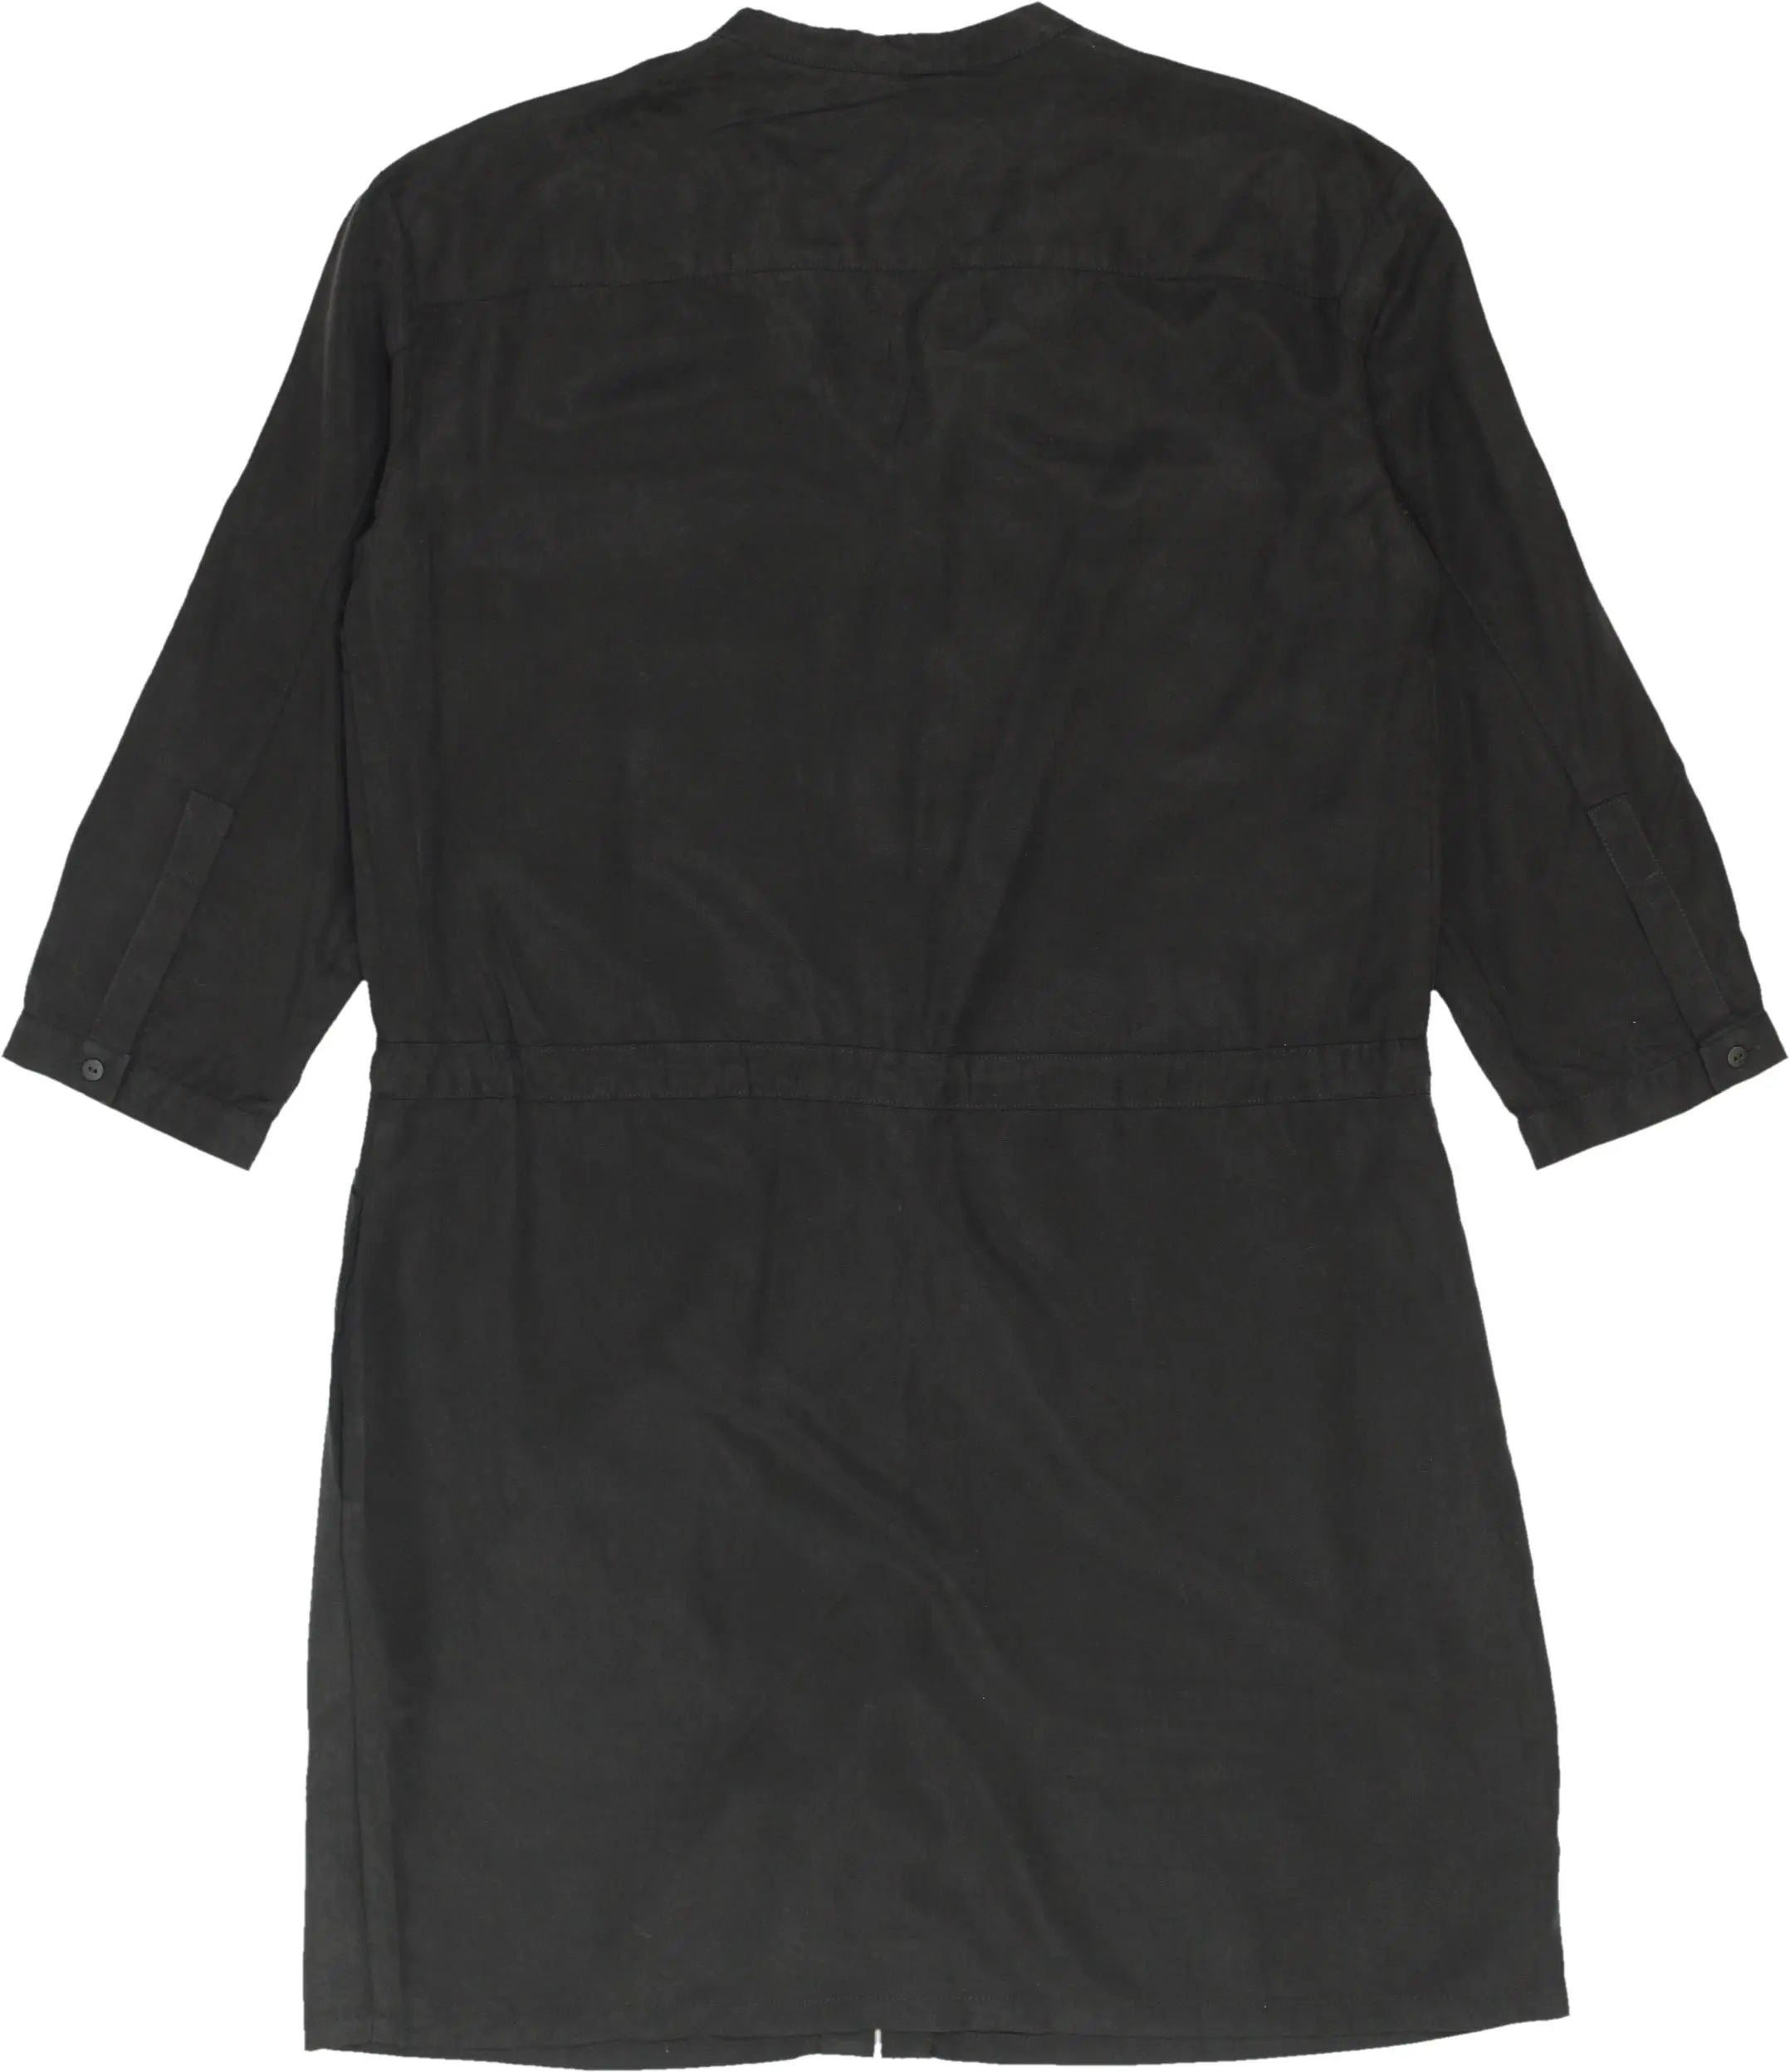 Mango - Black Dress- ThriftTale.com - Vintage and second handclothing